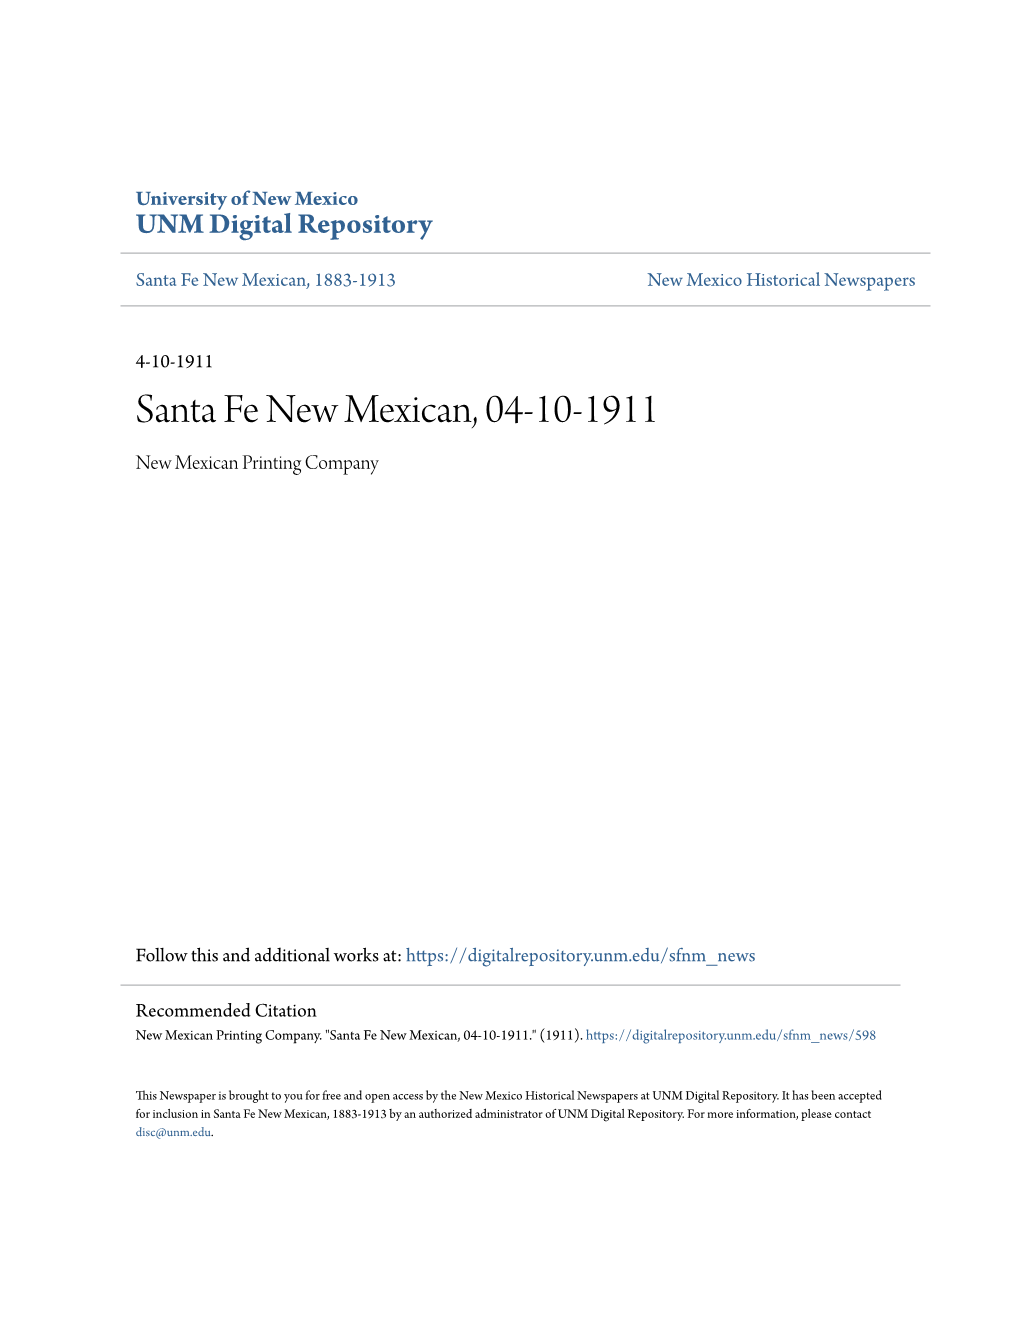 Santa Fe New Mexican, 04-10-1911 New Mexican Printing Company